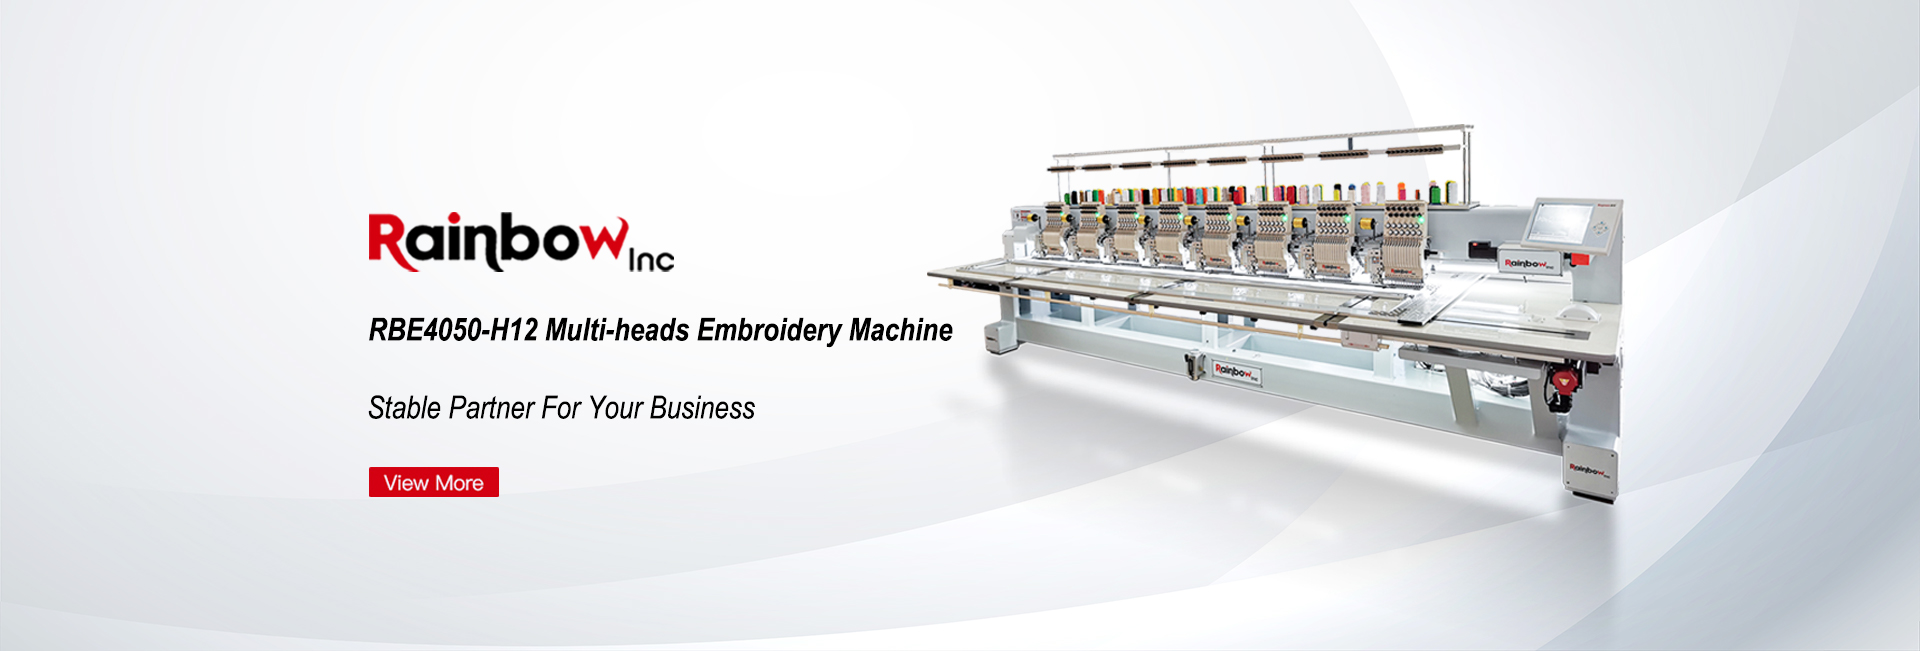 Rainbow multi-heads embroidery machine